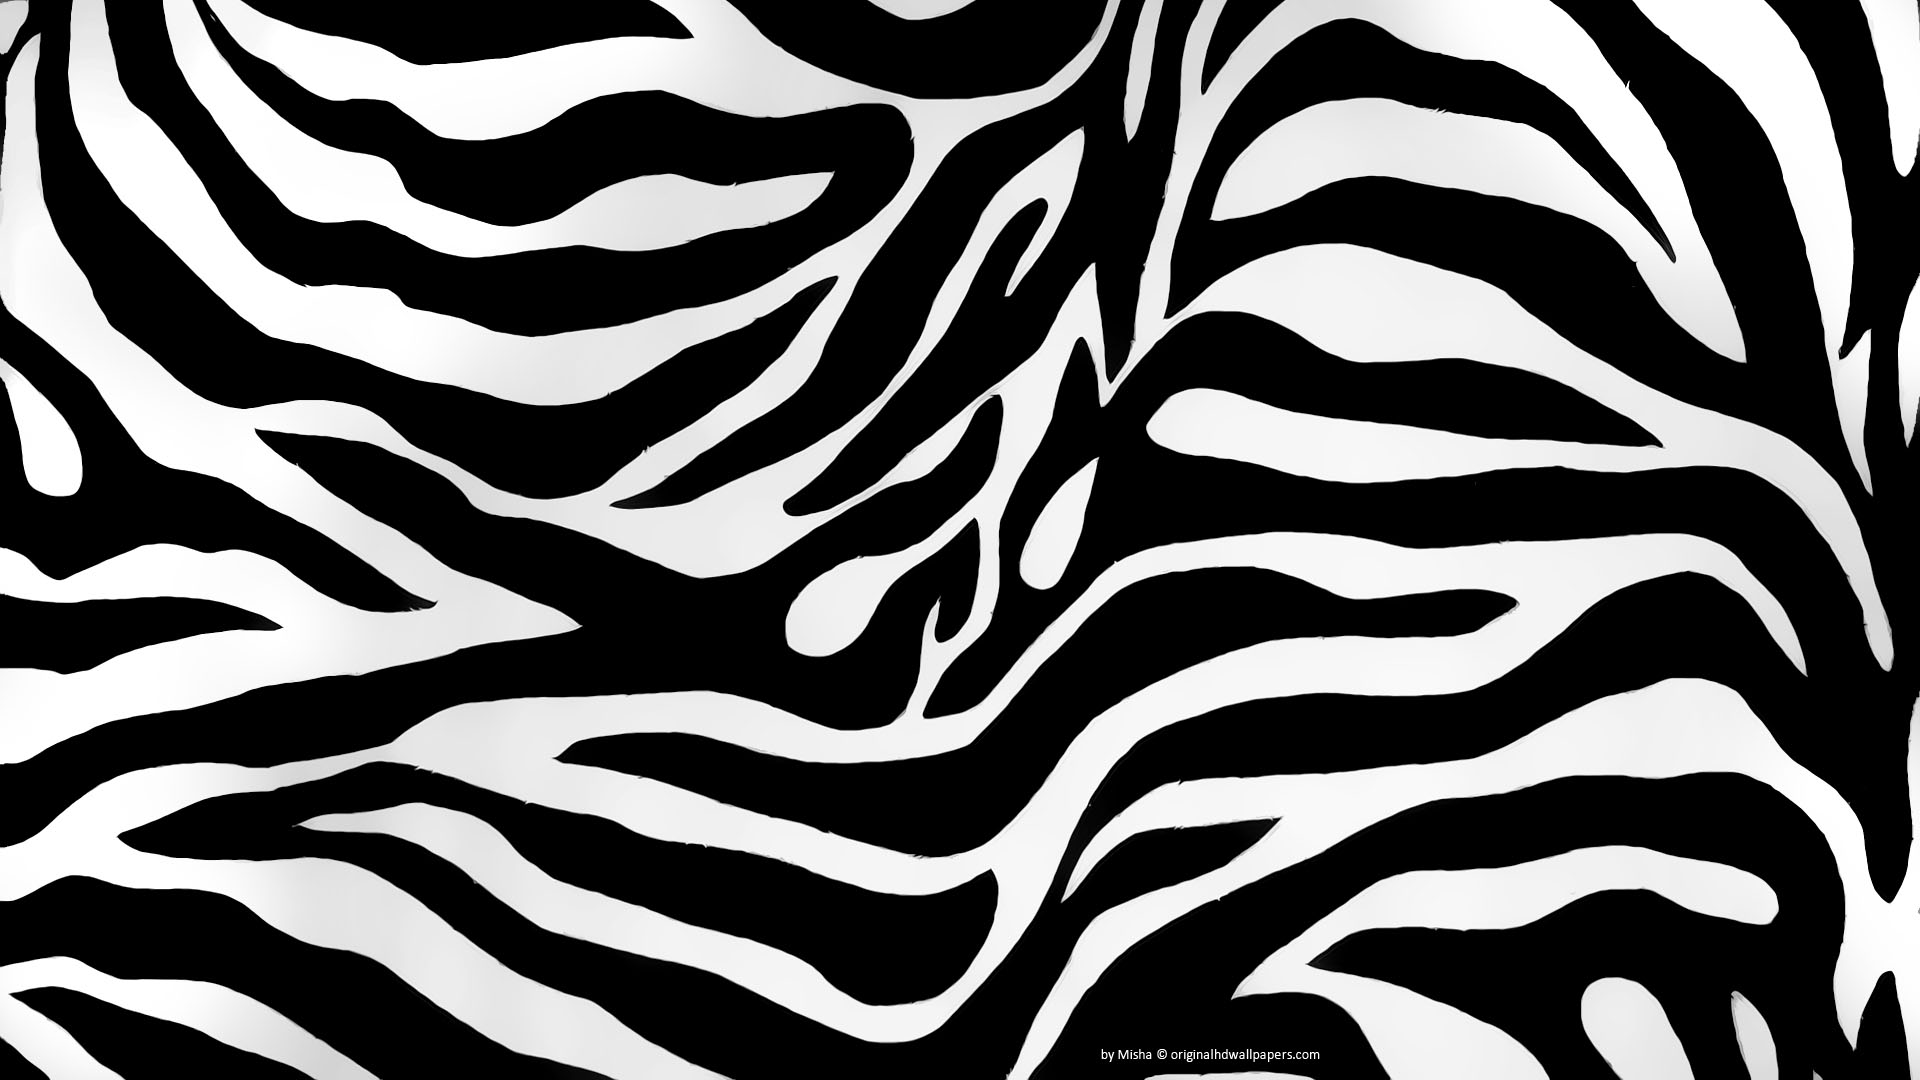 ***Sample Debona Masai Zebra Print Wallpaper 61